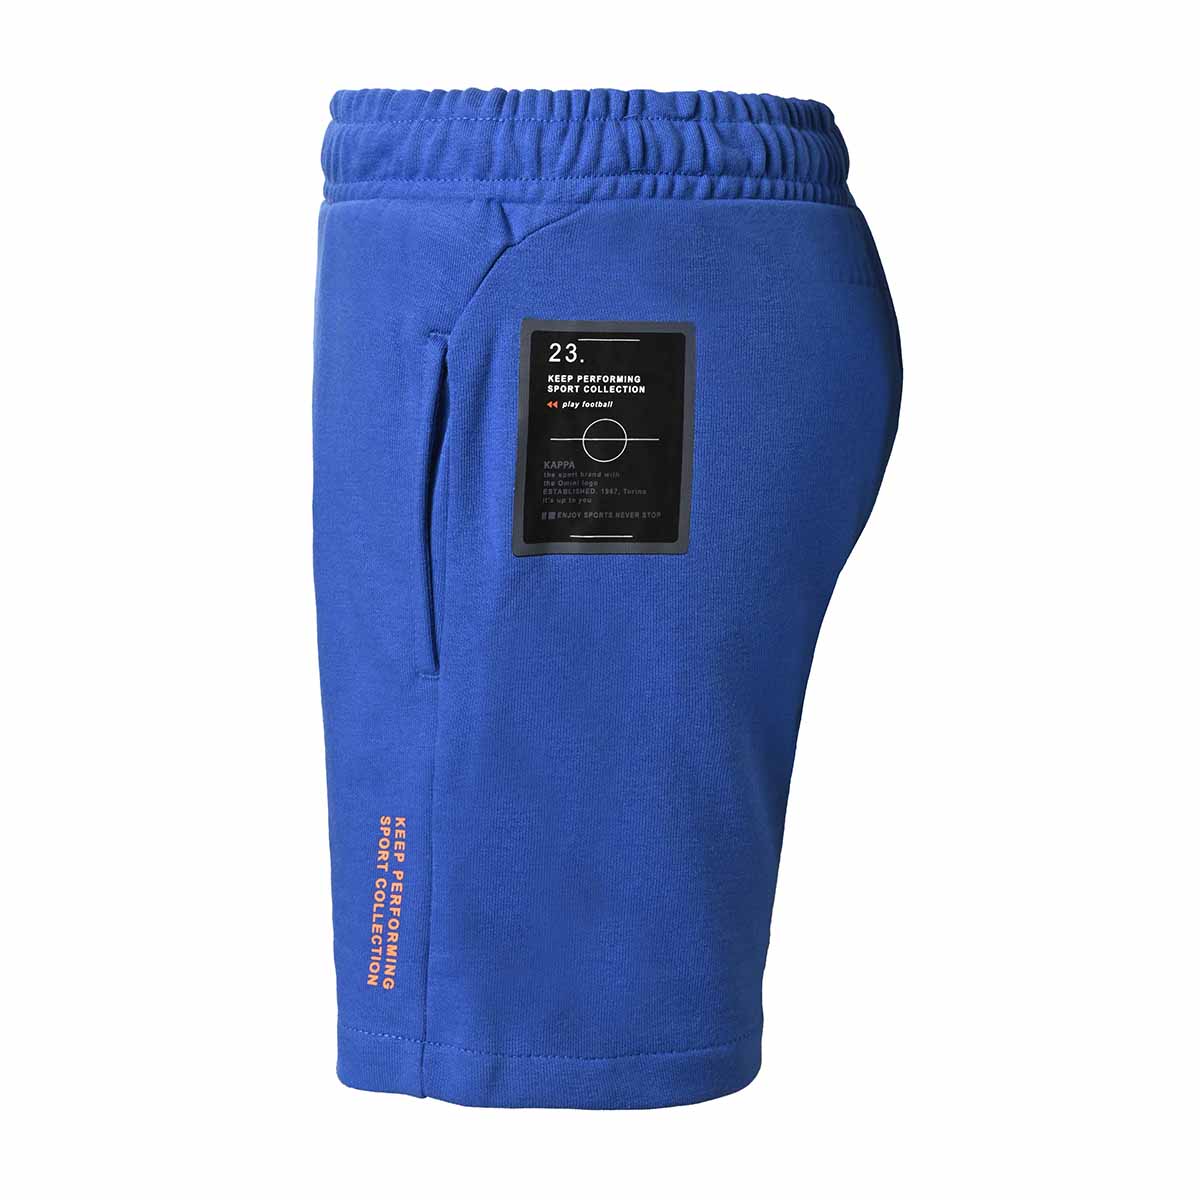 Pantalón Corto Kappa Bruino - Ropa Ideal Para El Gim O Entrenar  MKP